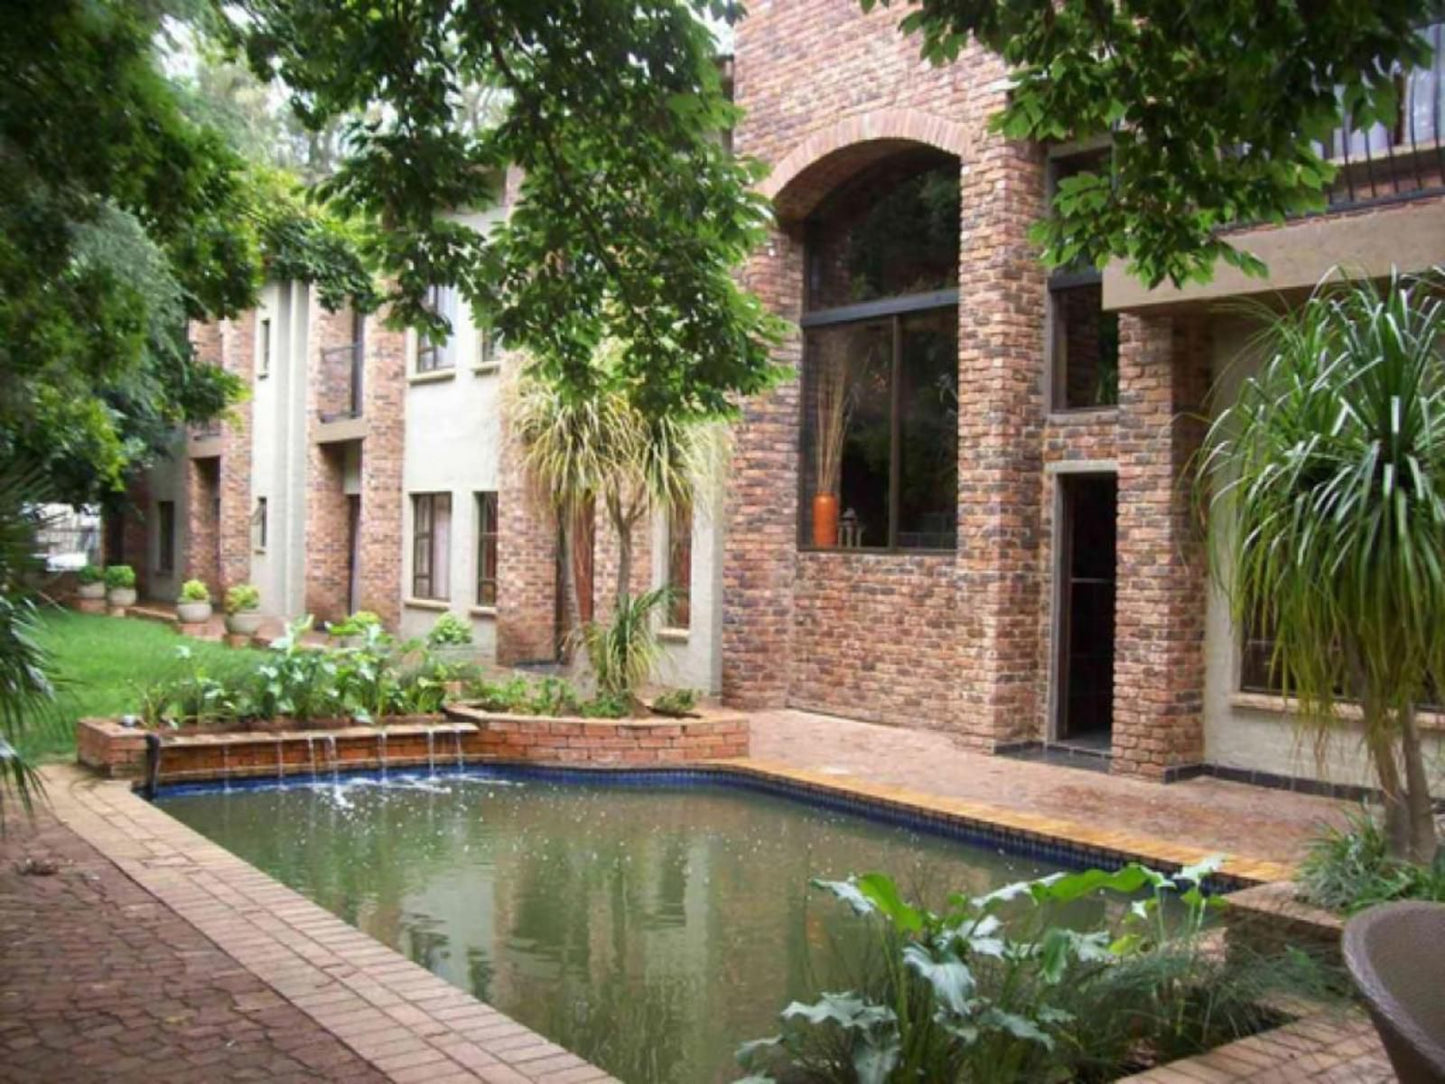 24 Onvrey Boutique Hotel Boksburg Johannesburg Gauteng South Africa House, Building, Architecture, Garden, Nature, Plant